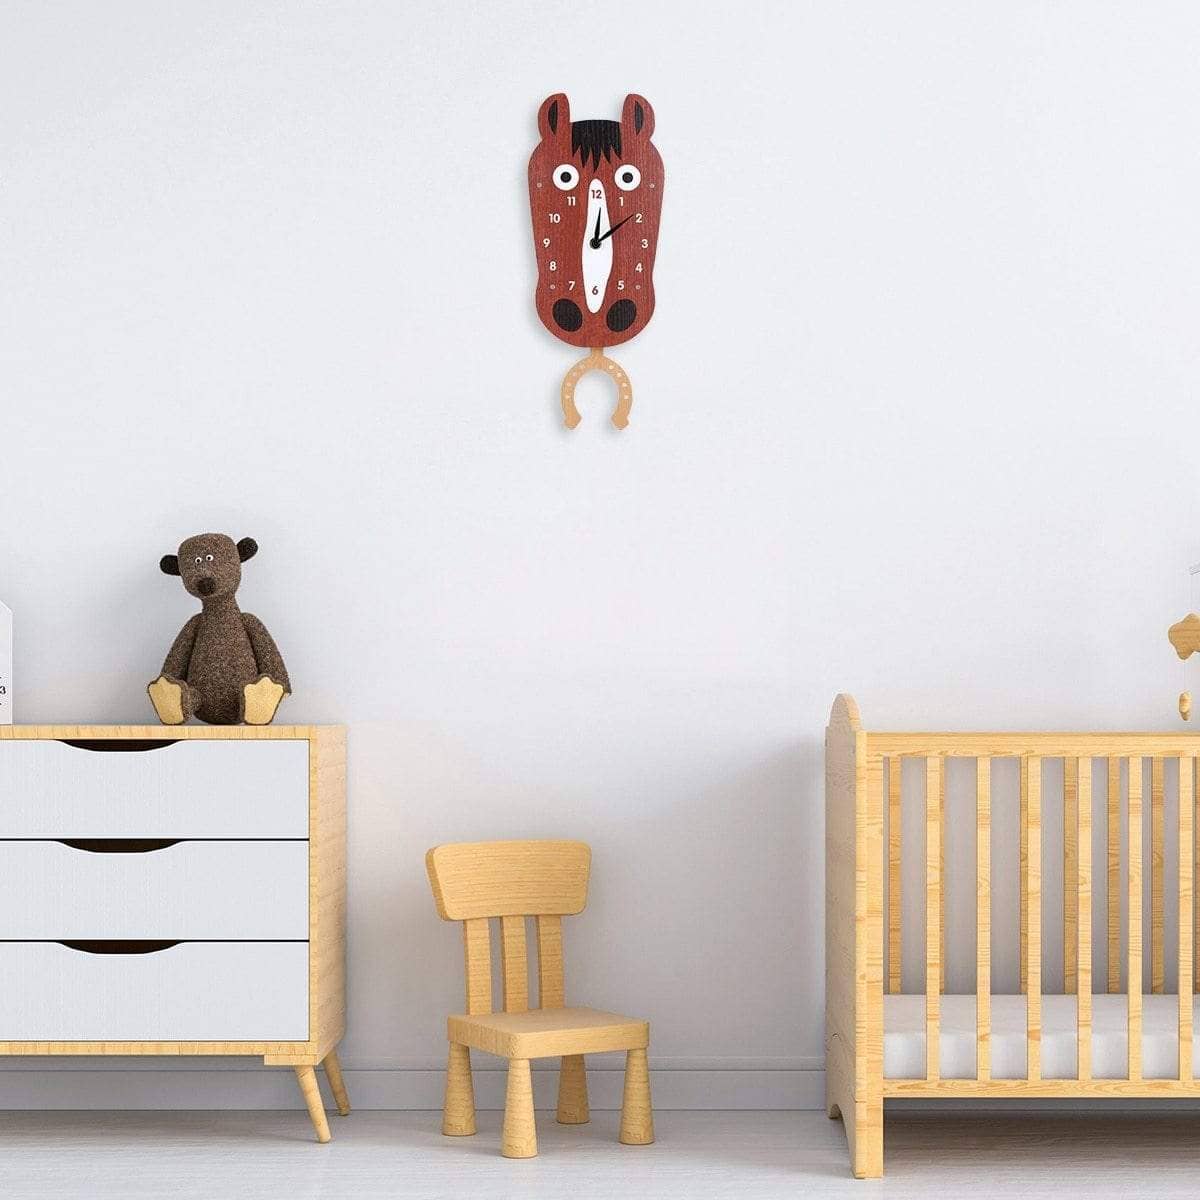 Swinging Horse Kids Bedroom Wall Clocks: Fun and Whimsical Decor